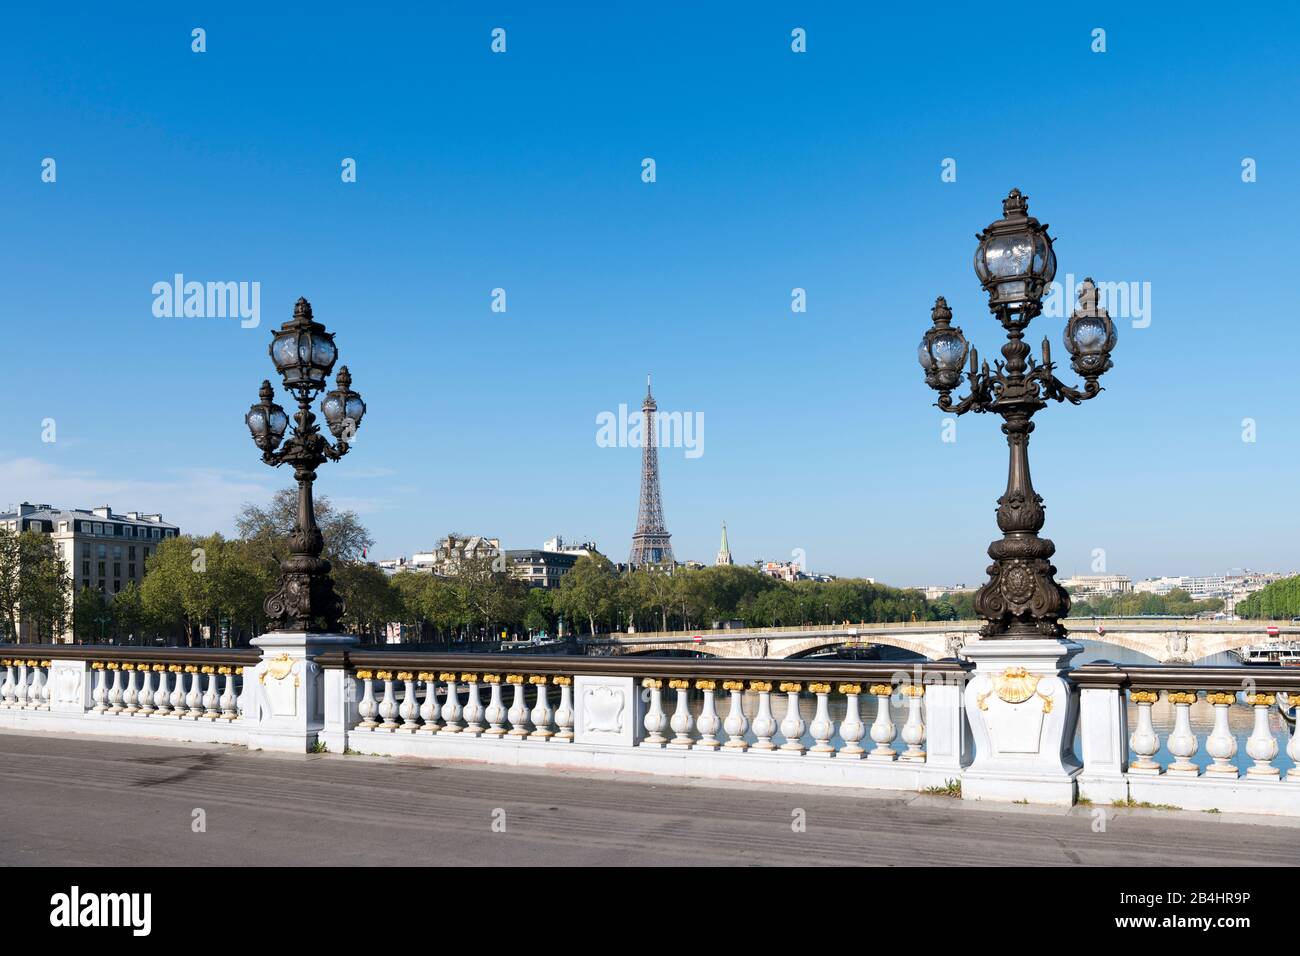 Eiffelturm und herzen hi-res stock photography and images - Alamy